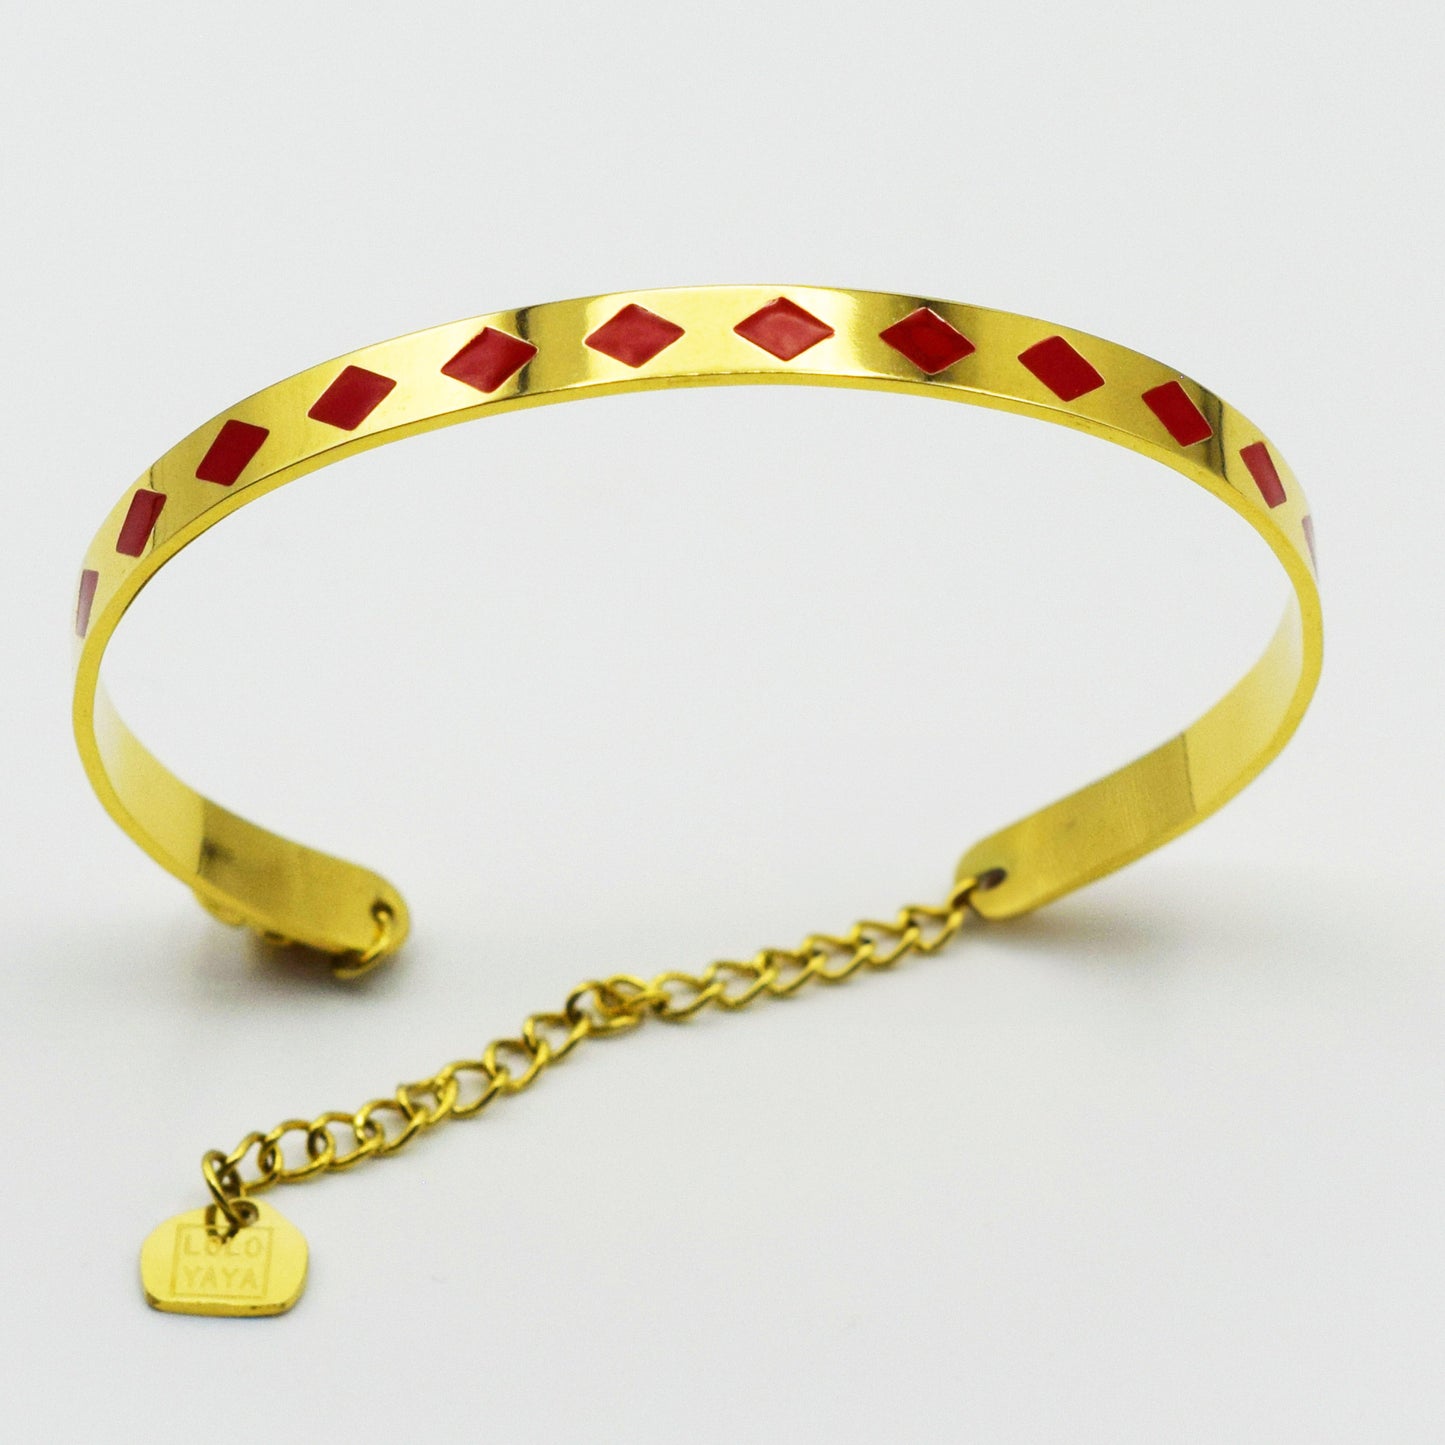 ACIER INOXYDABLE - Bracelet jonc losange rouge